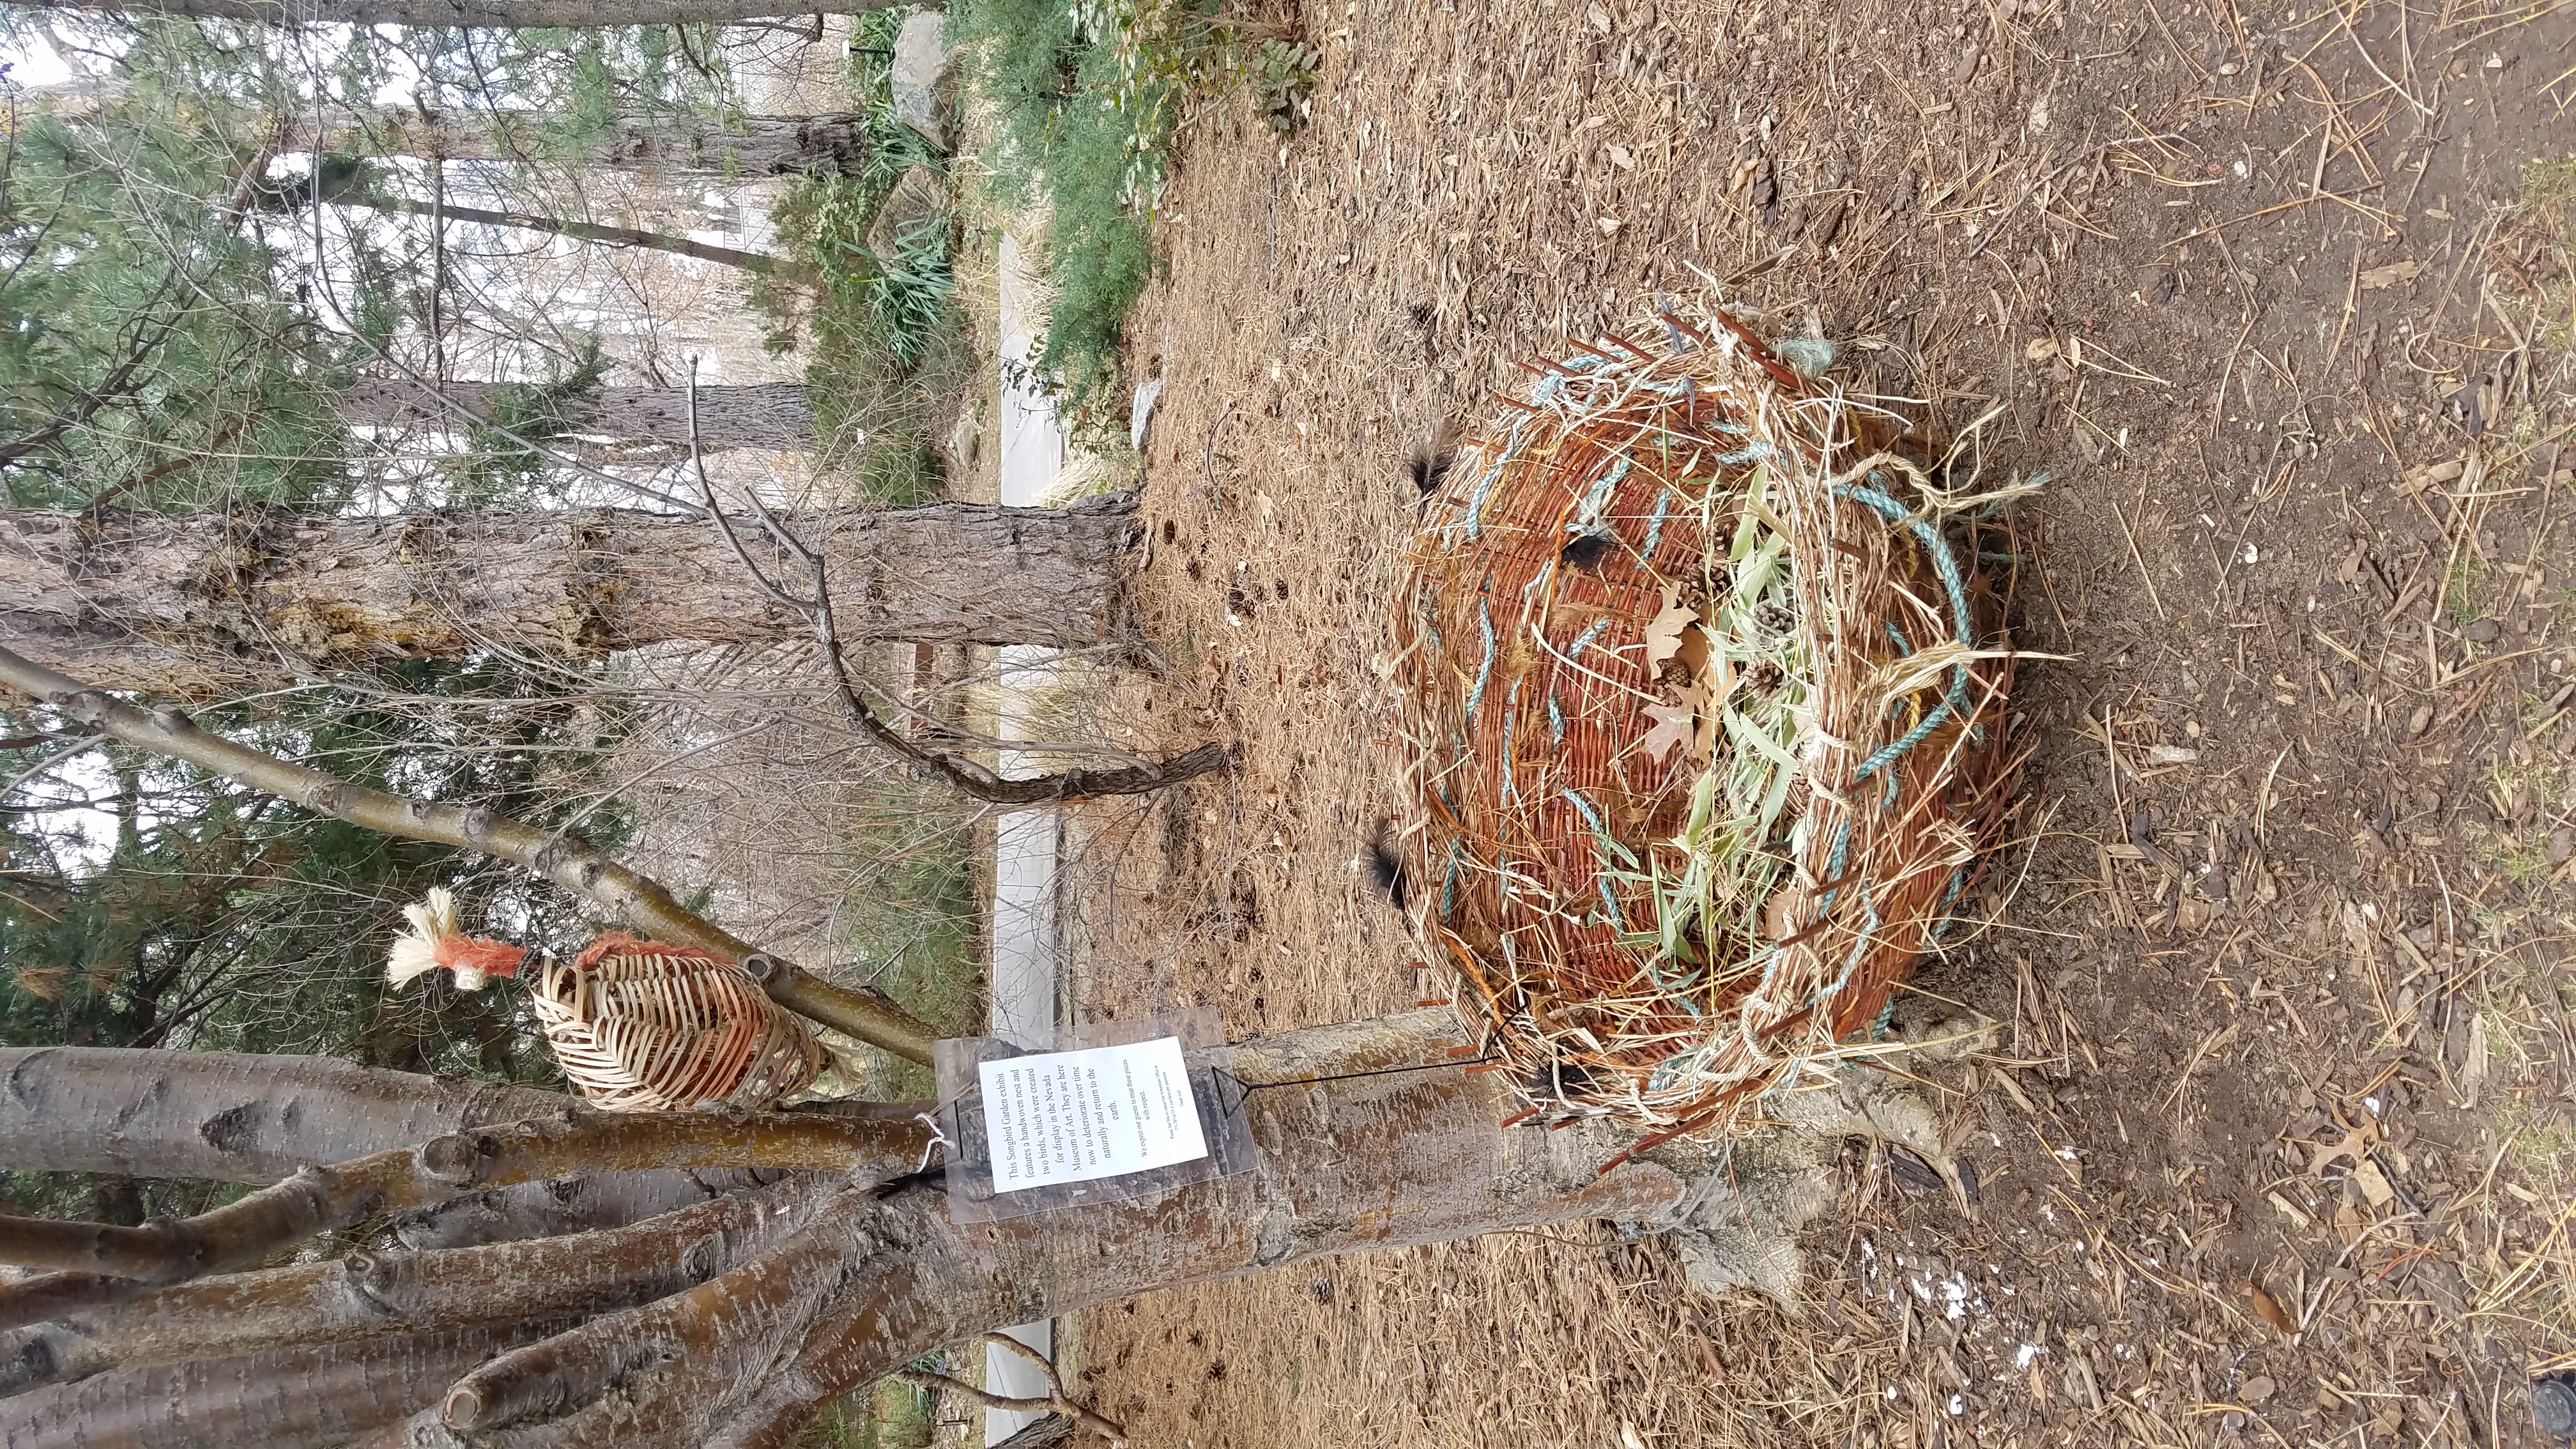 A handwoven nest and bird on display in Songbird Garden